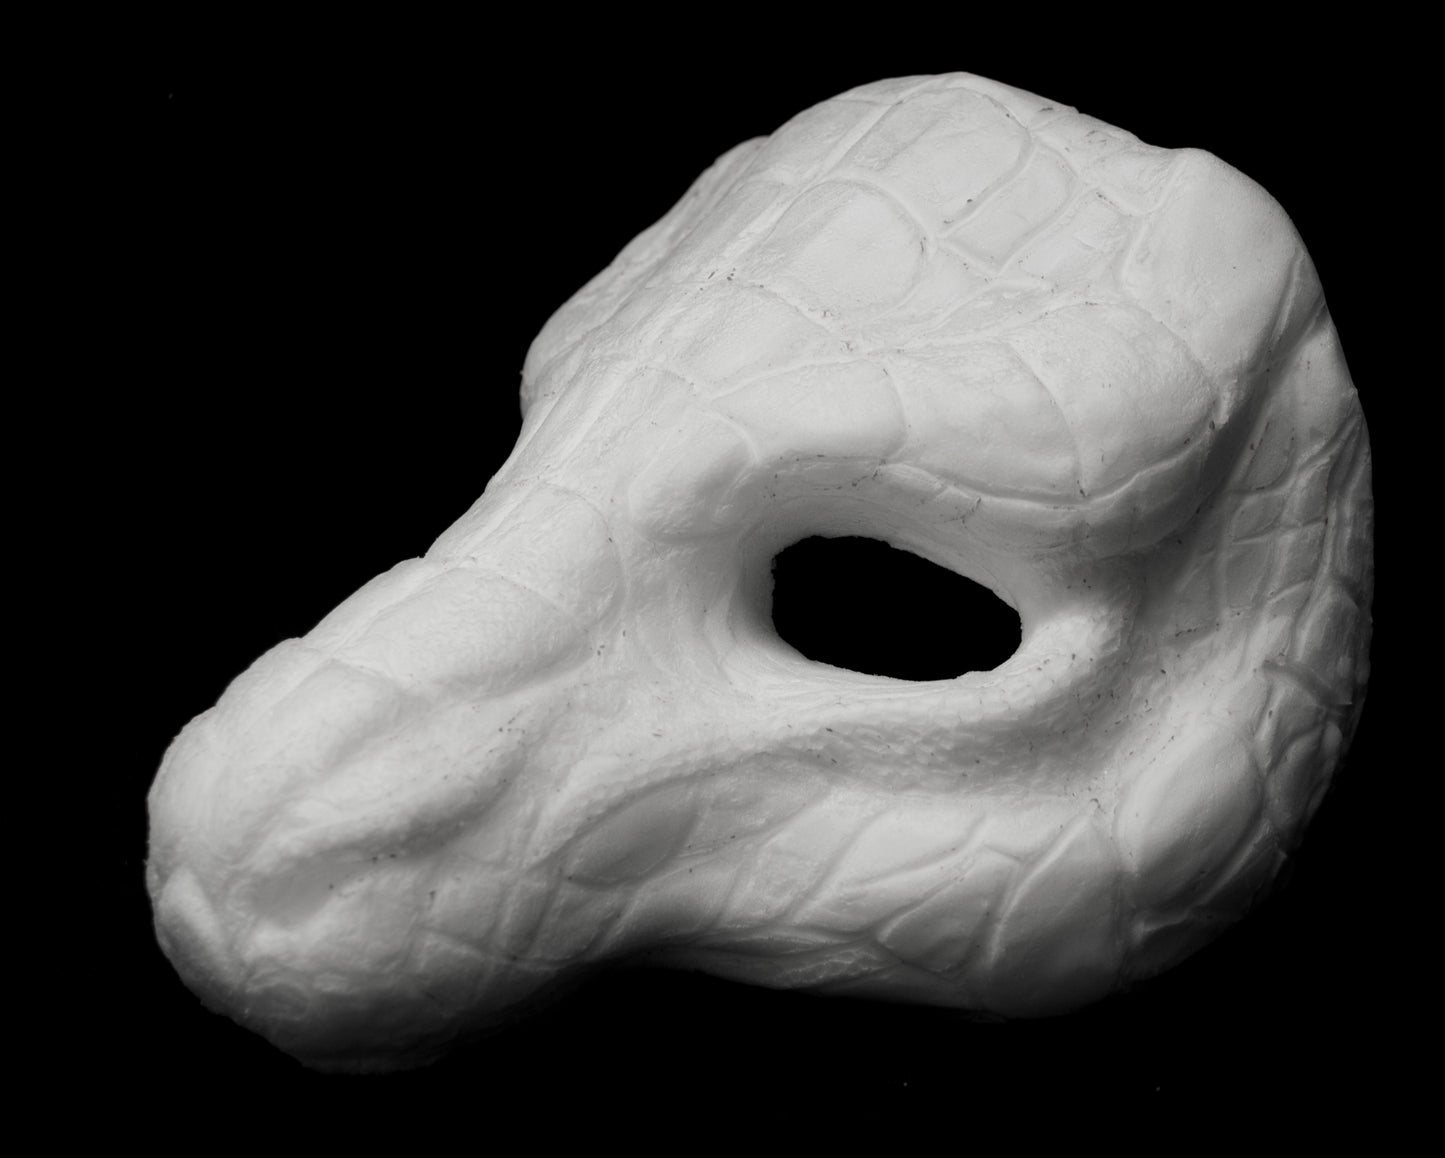 Dragon / Reptilian Mask for LARP, soft foam for safe combat